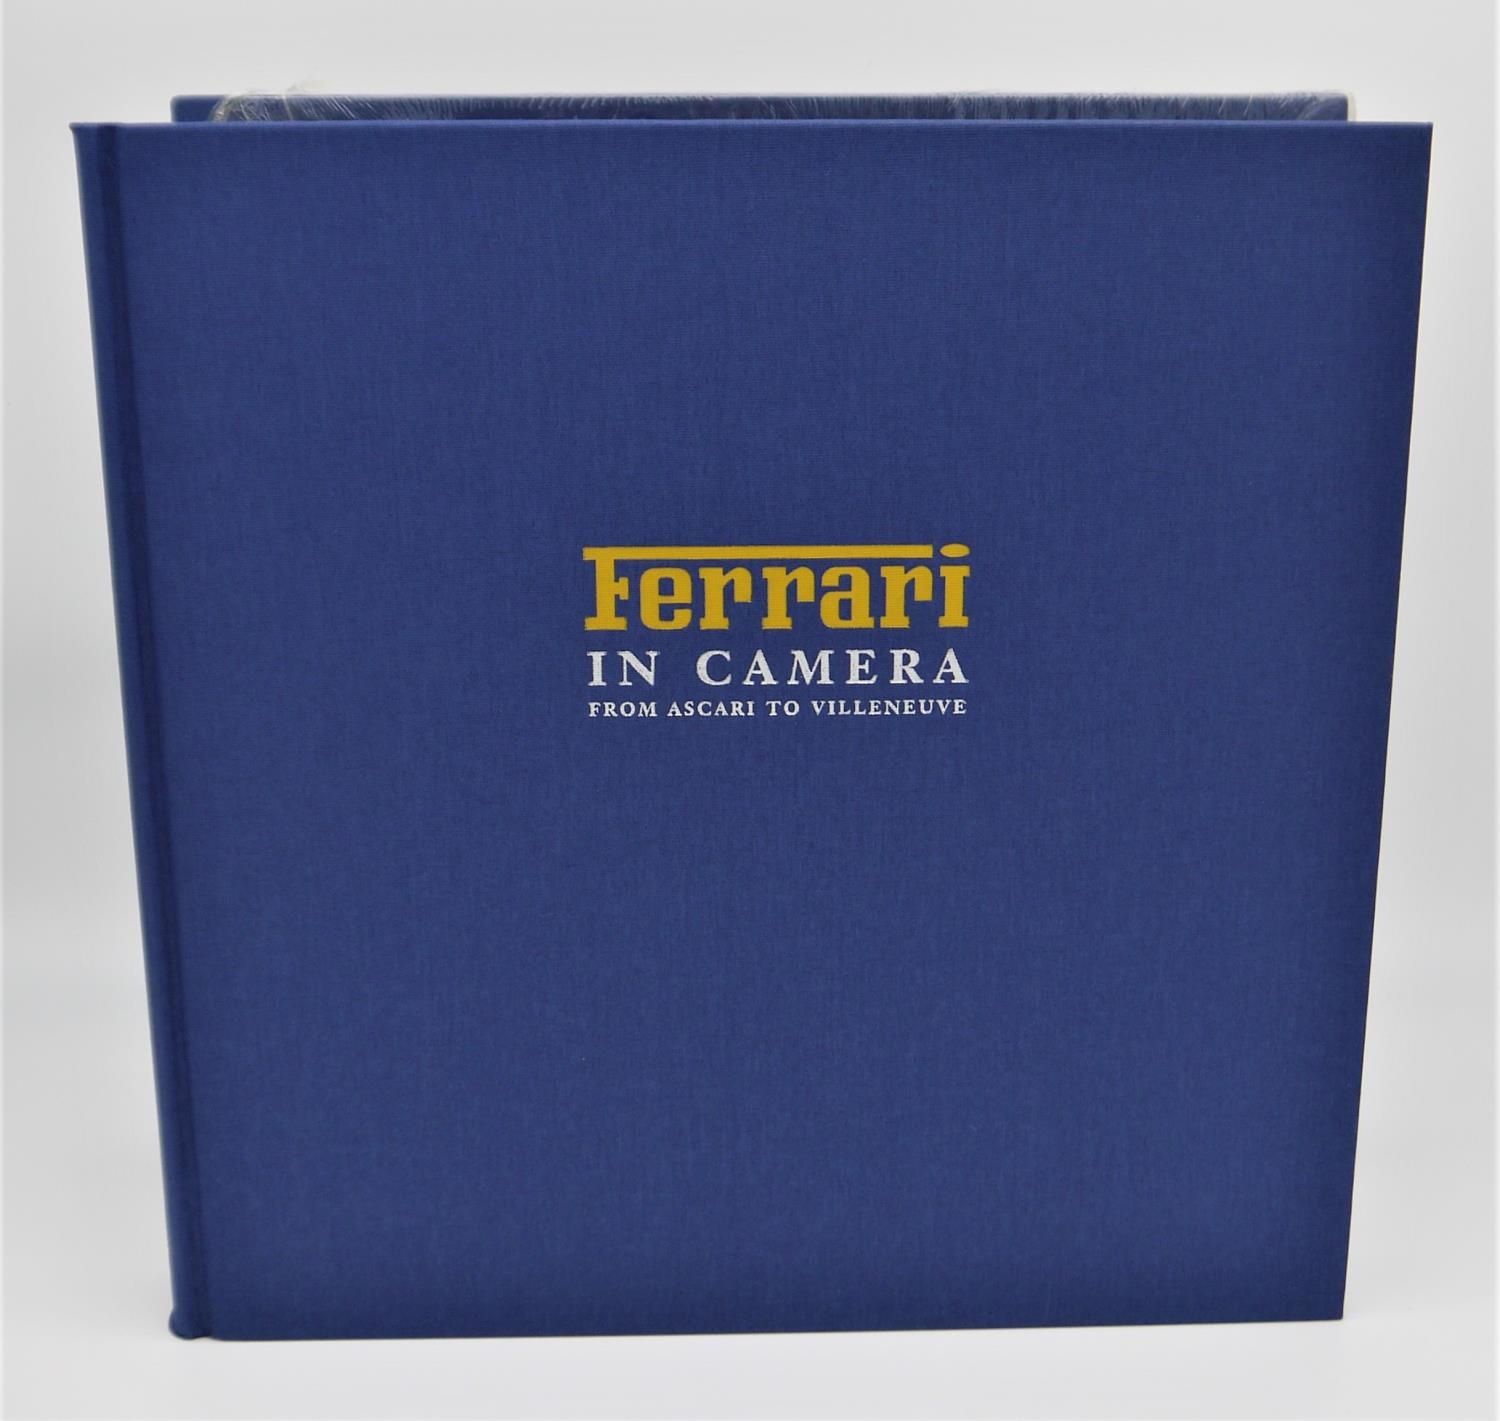 GEOFFREY GODDARD: FERRARI IN CAMERA FROM ASCARI TO VILLENEUVE limited edition copy 36 of 1000 of